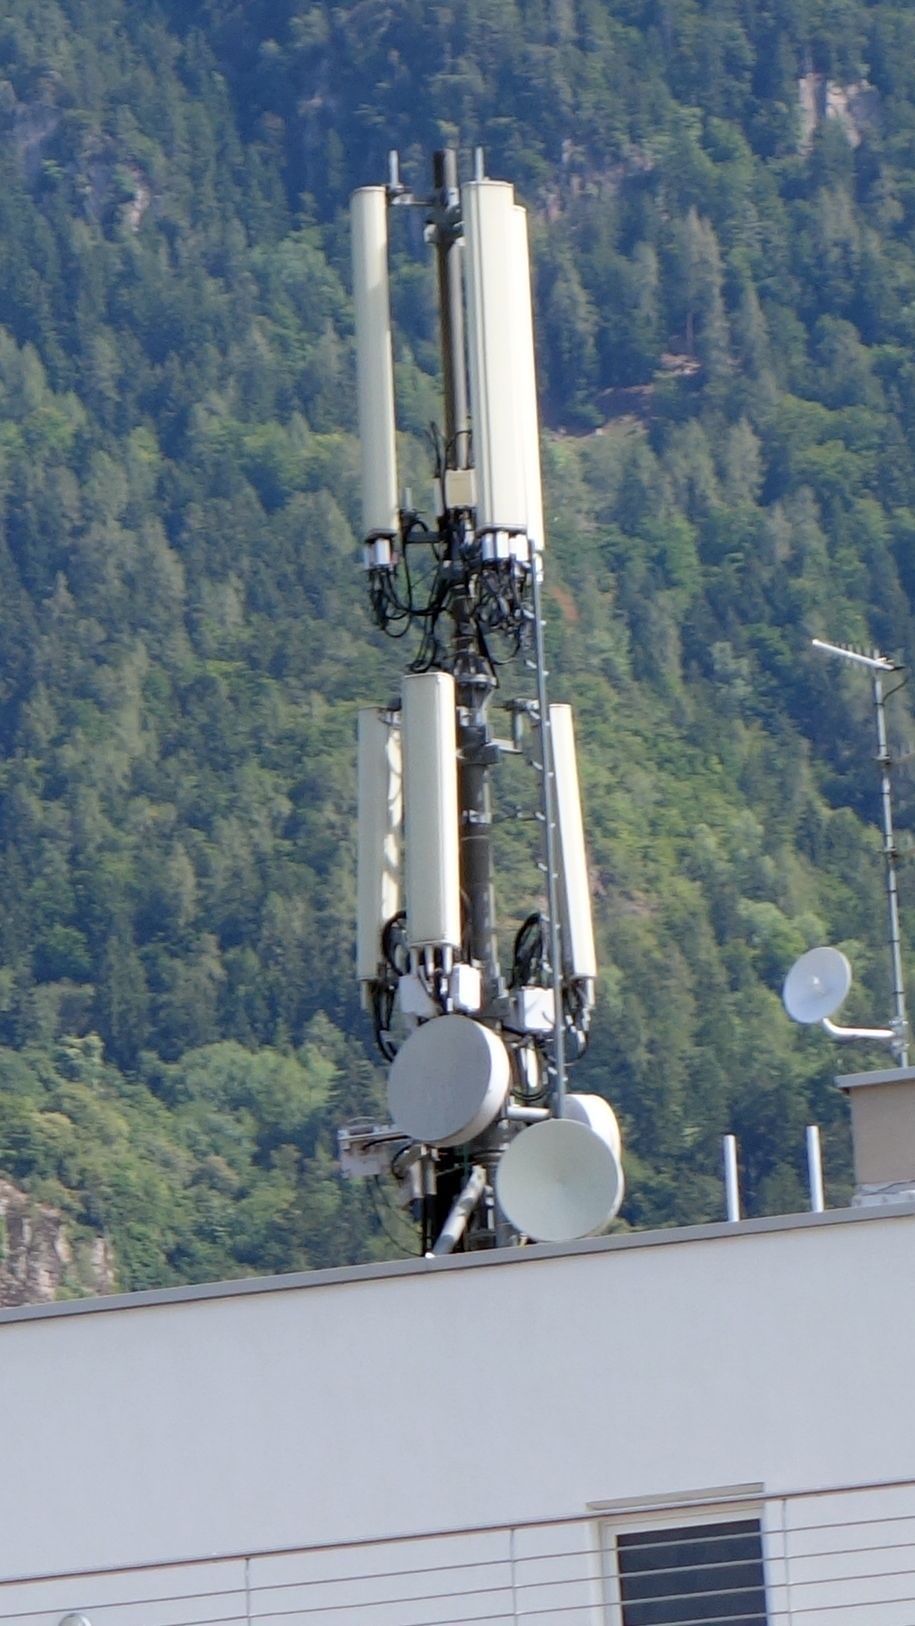 Die Antennen im September 2019